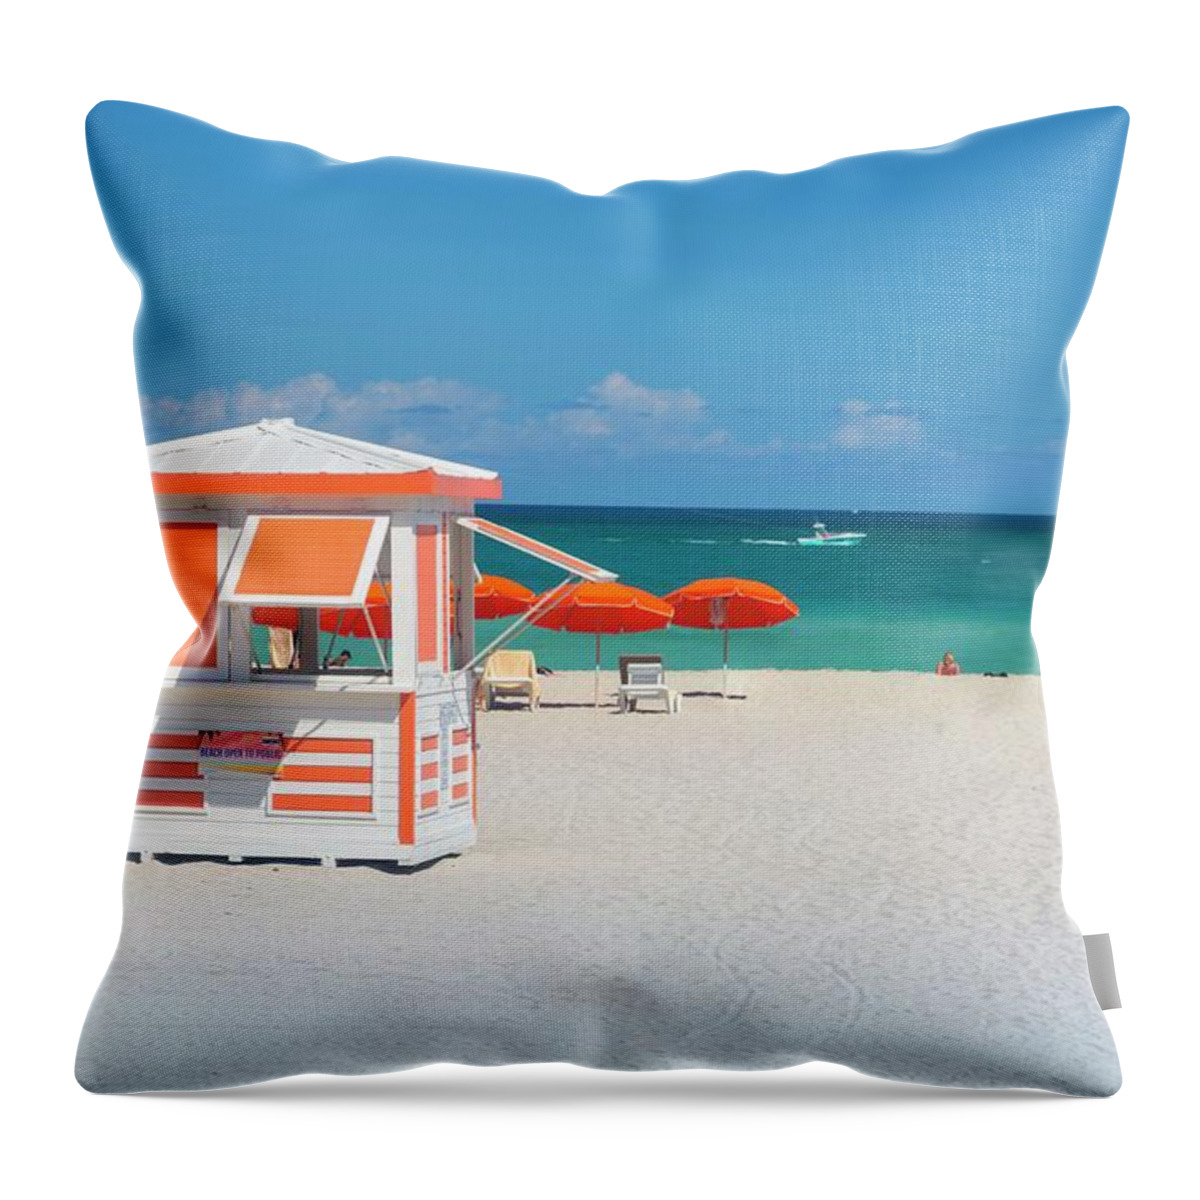 Estock Throw Pillow featuring the digital art Kios In South Beach, Miami by Claudia Uripos